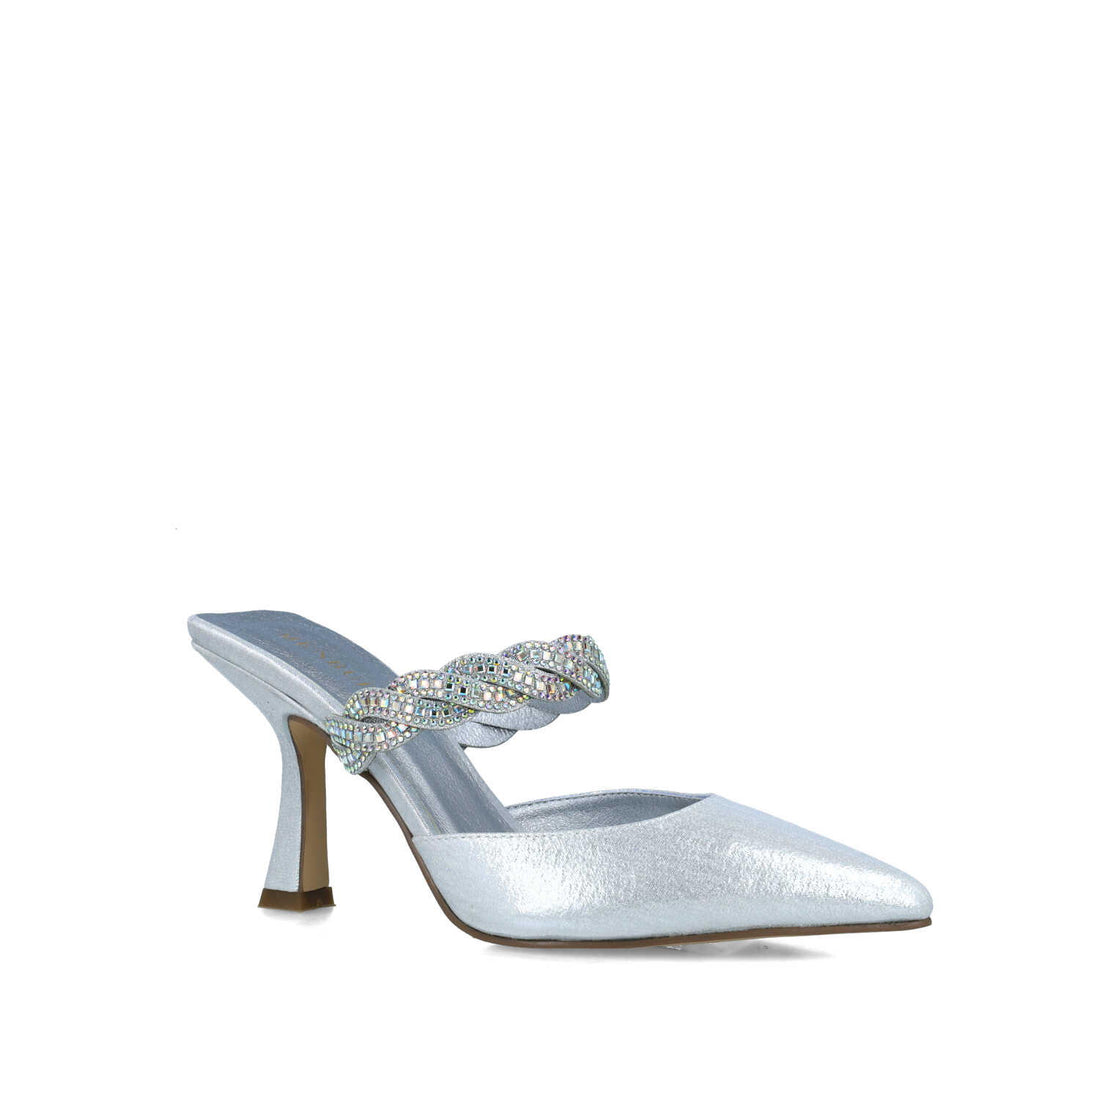 Silver Sandal With Embellished Strap_24795_09_02